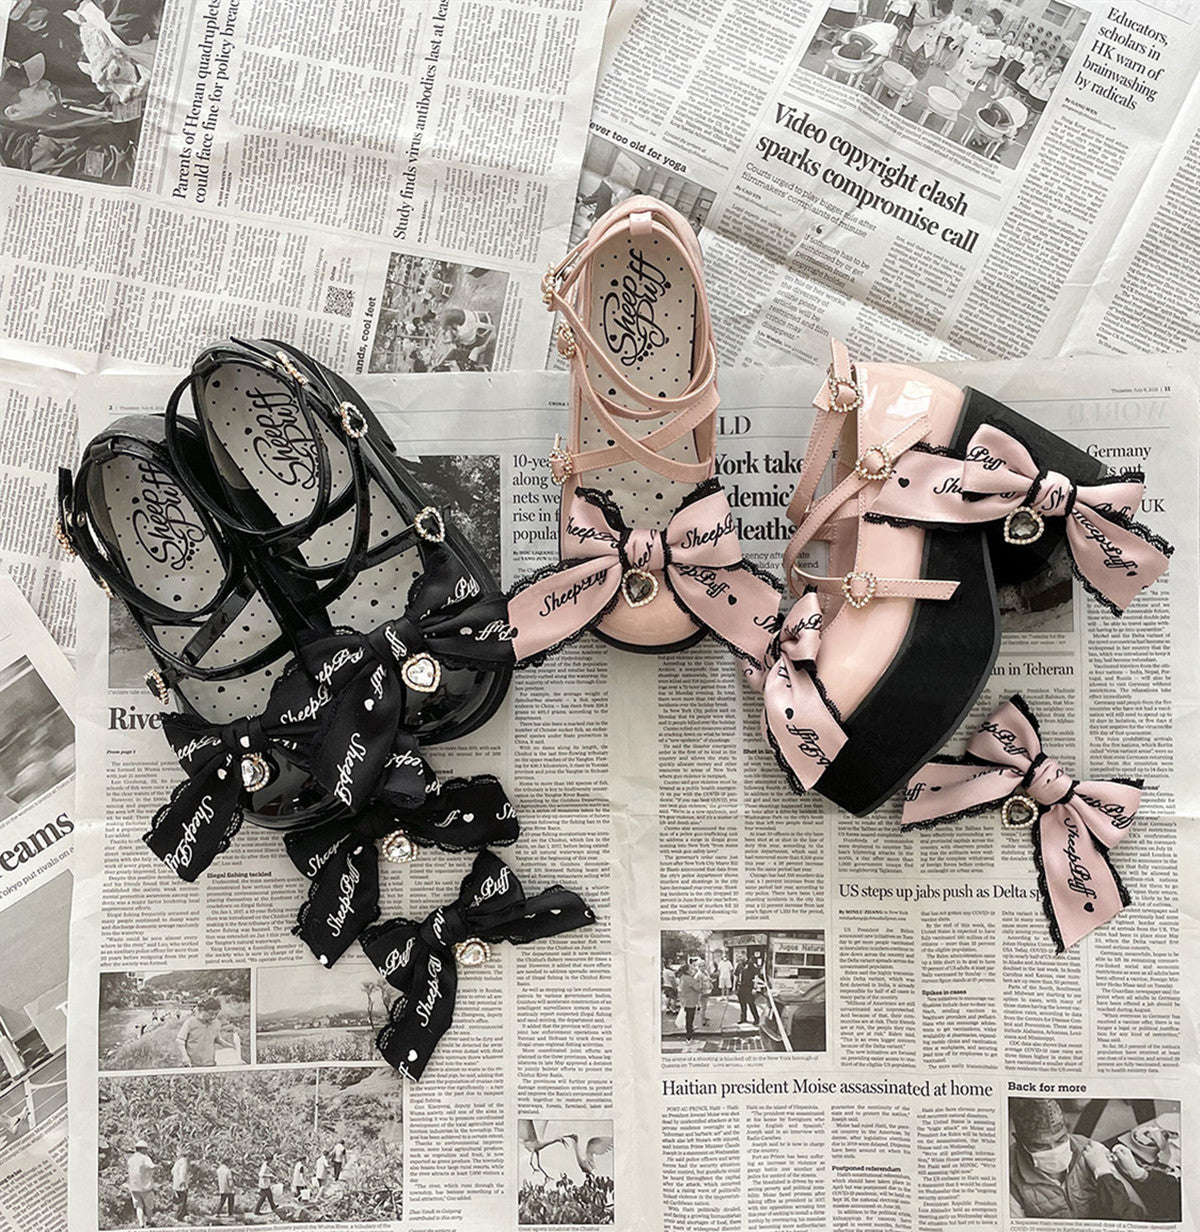 Sheep Puff~Black Pink Japanese Lolita Thick Heel Shoes   